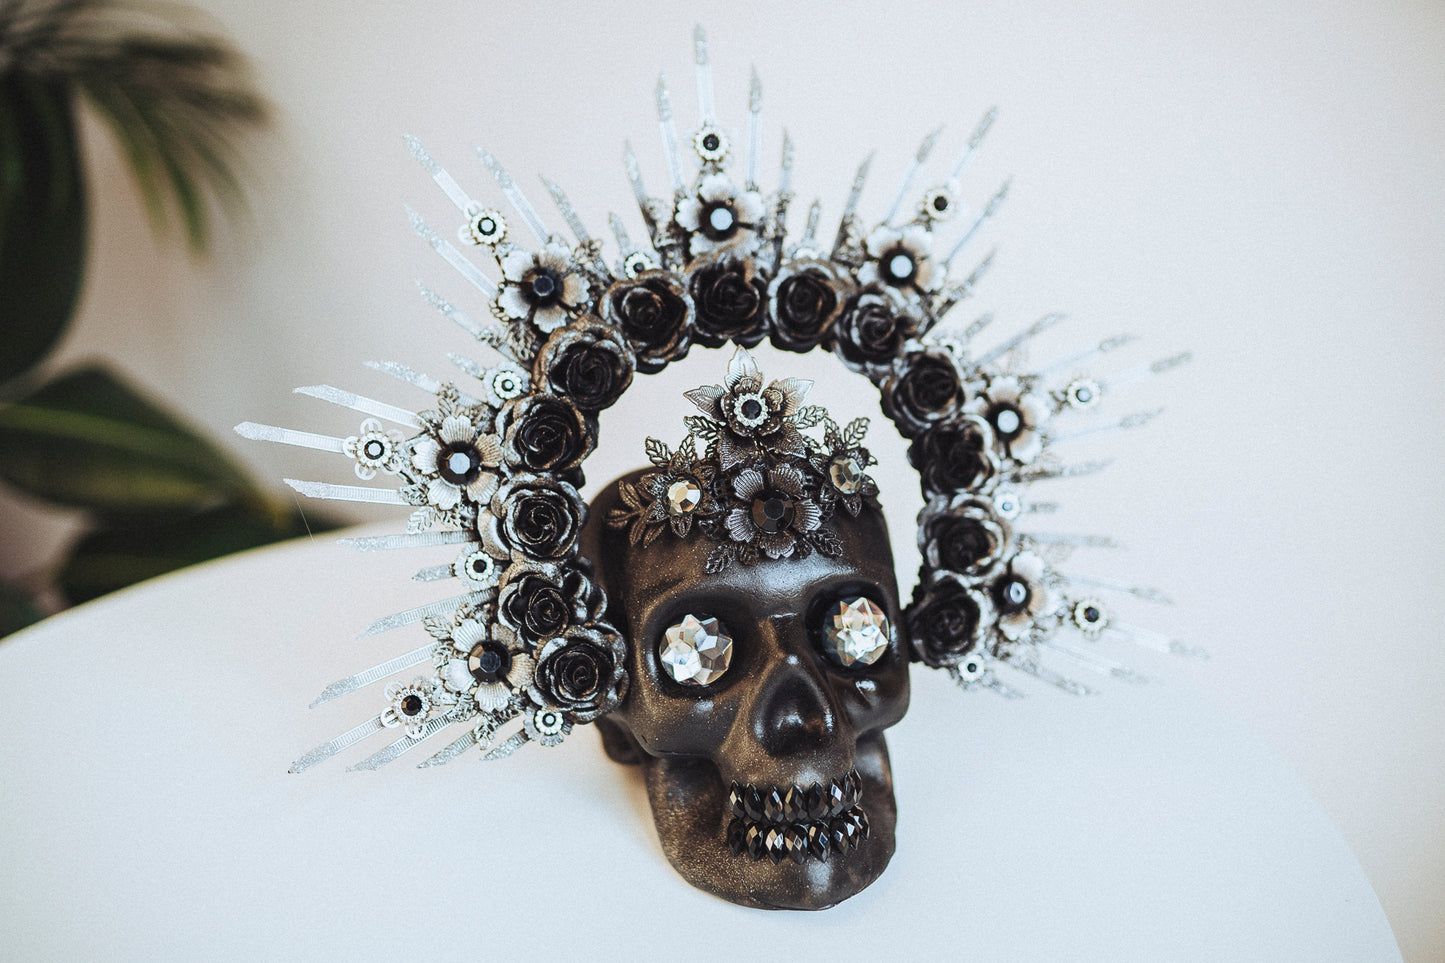 Grey Sugar Skull Home Decoration Halloween